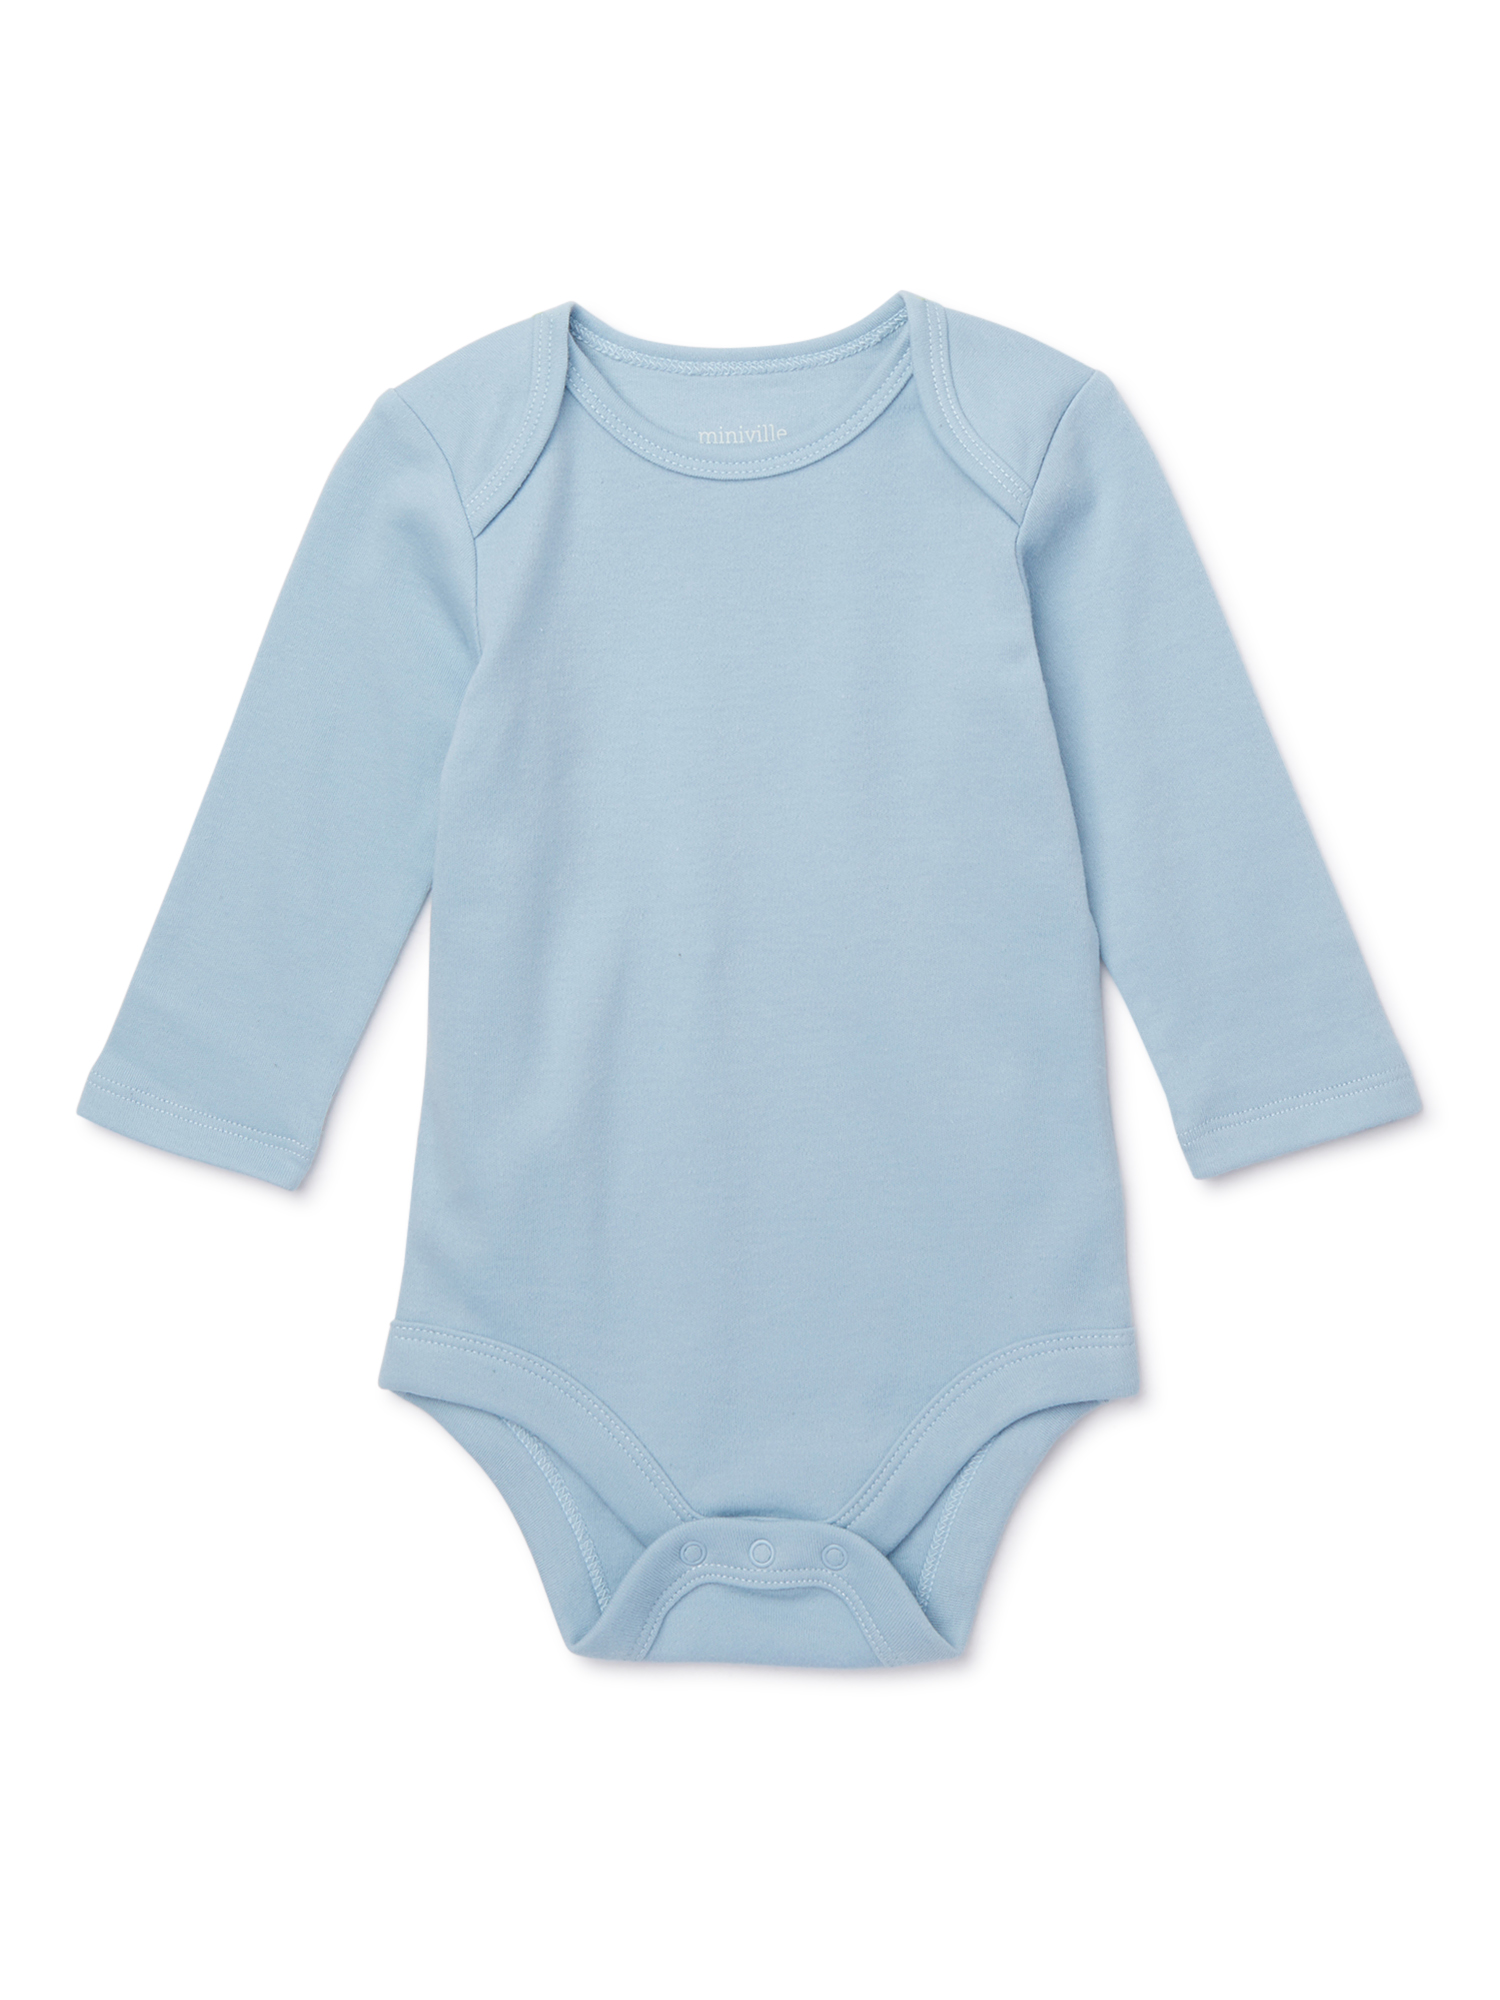 Miniville Baby Boy Blue Bodysuit, Joggers, Bib and Hat Outfit Set, 4 ...